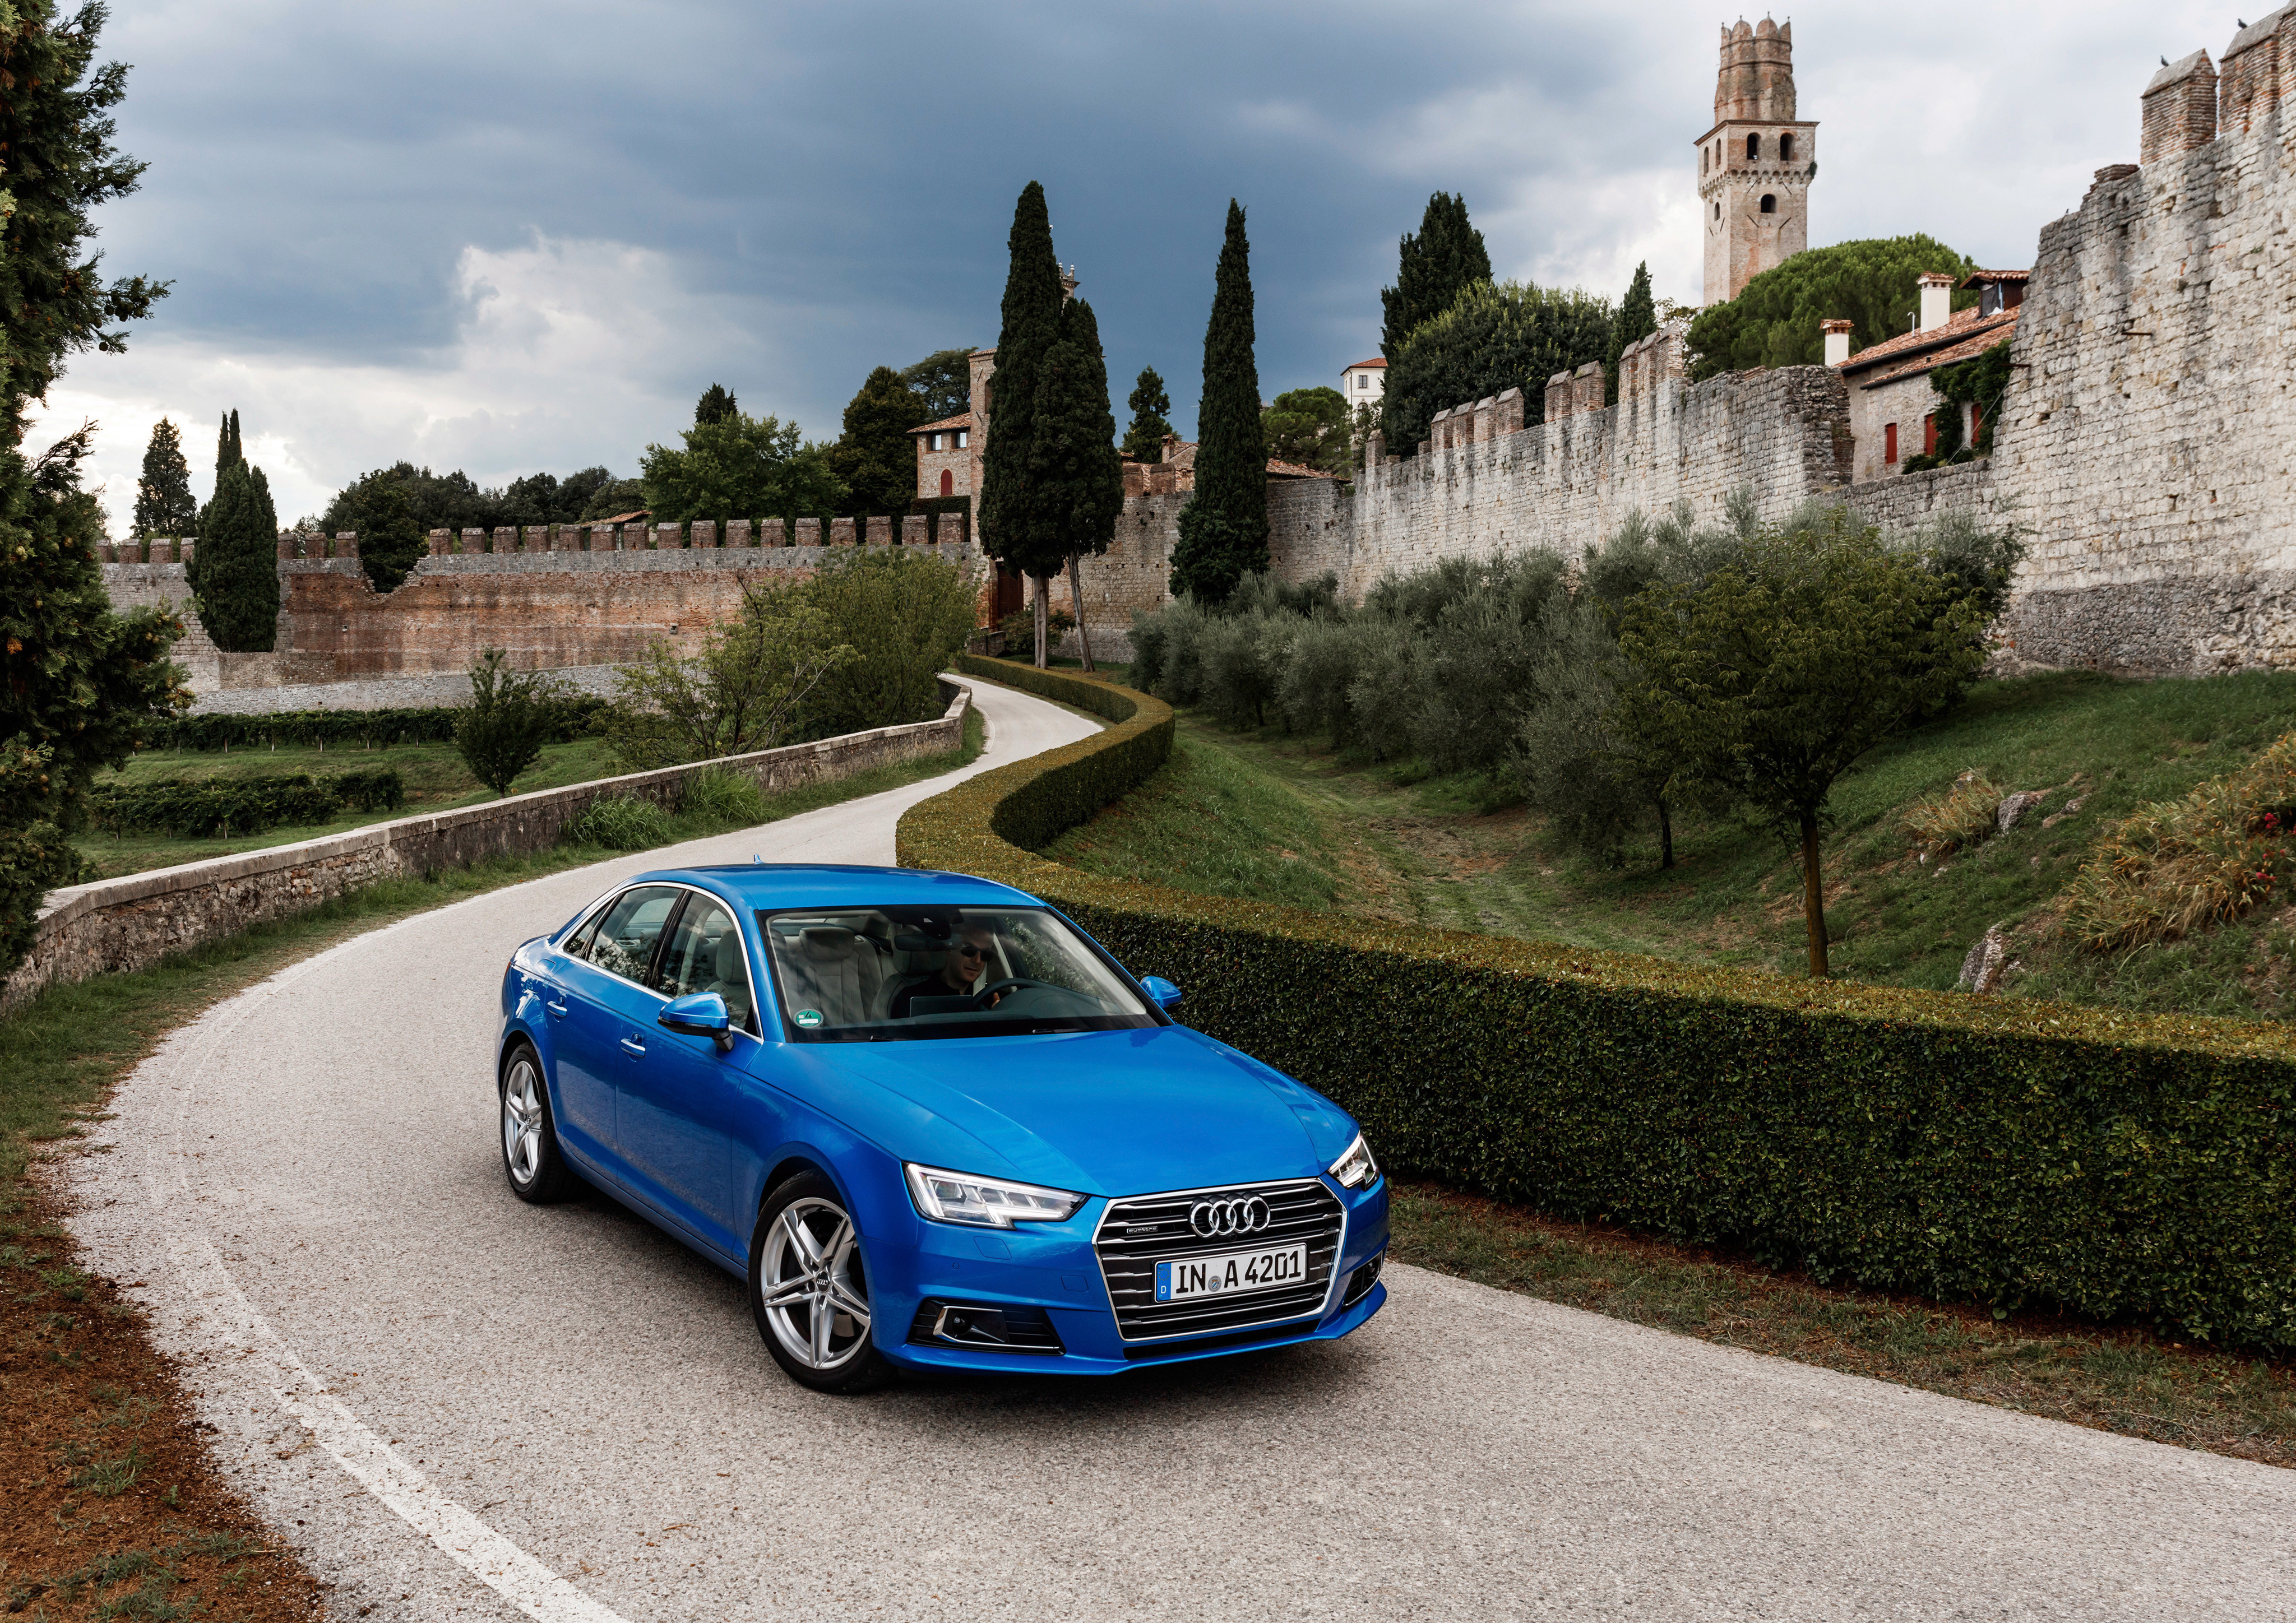 Audi A4 Audi Car Luxury Car Vehicle Blue Car 4096x2896